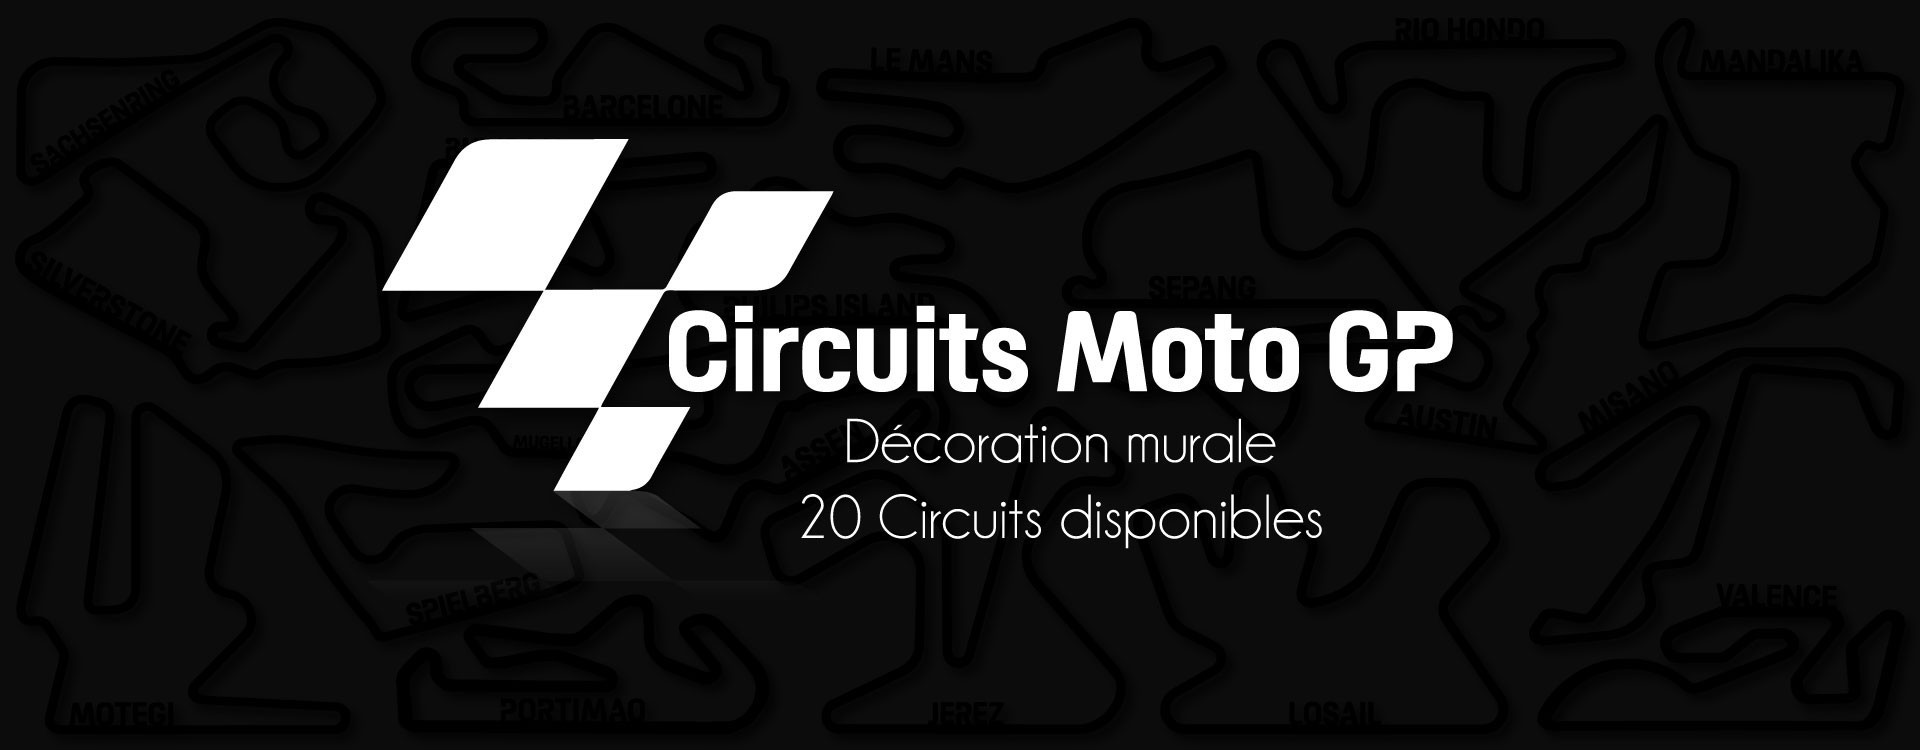 DECORATION MURALE CIRCUIT MOTO GP